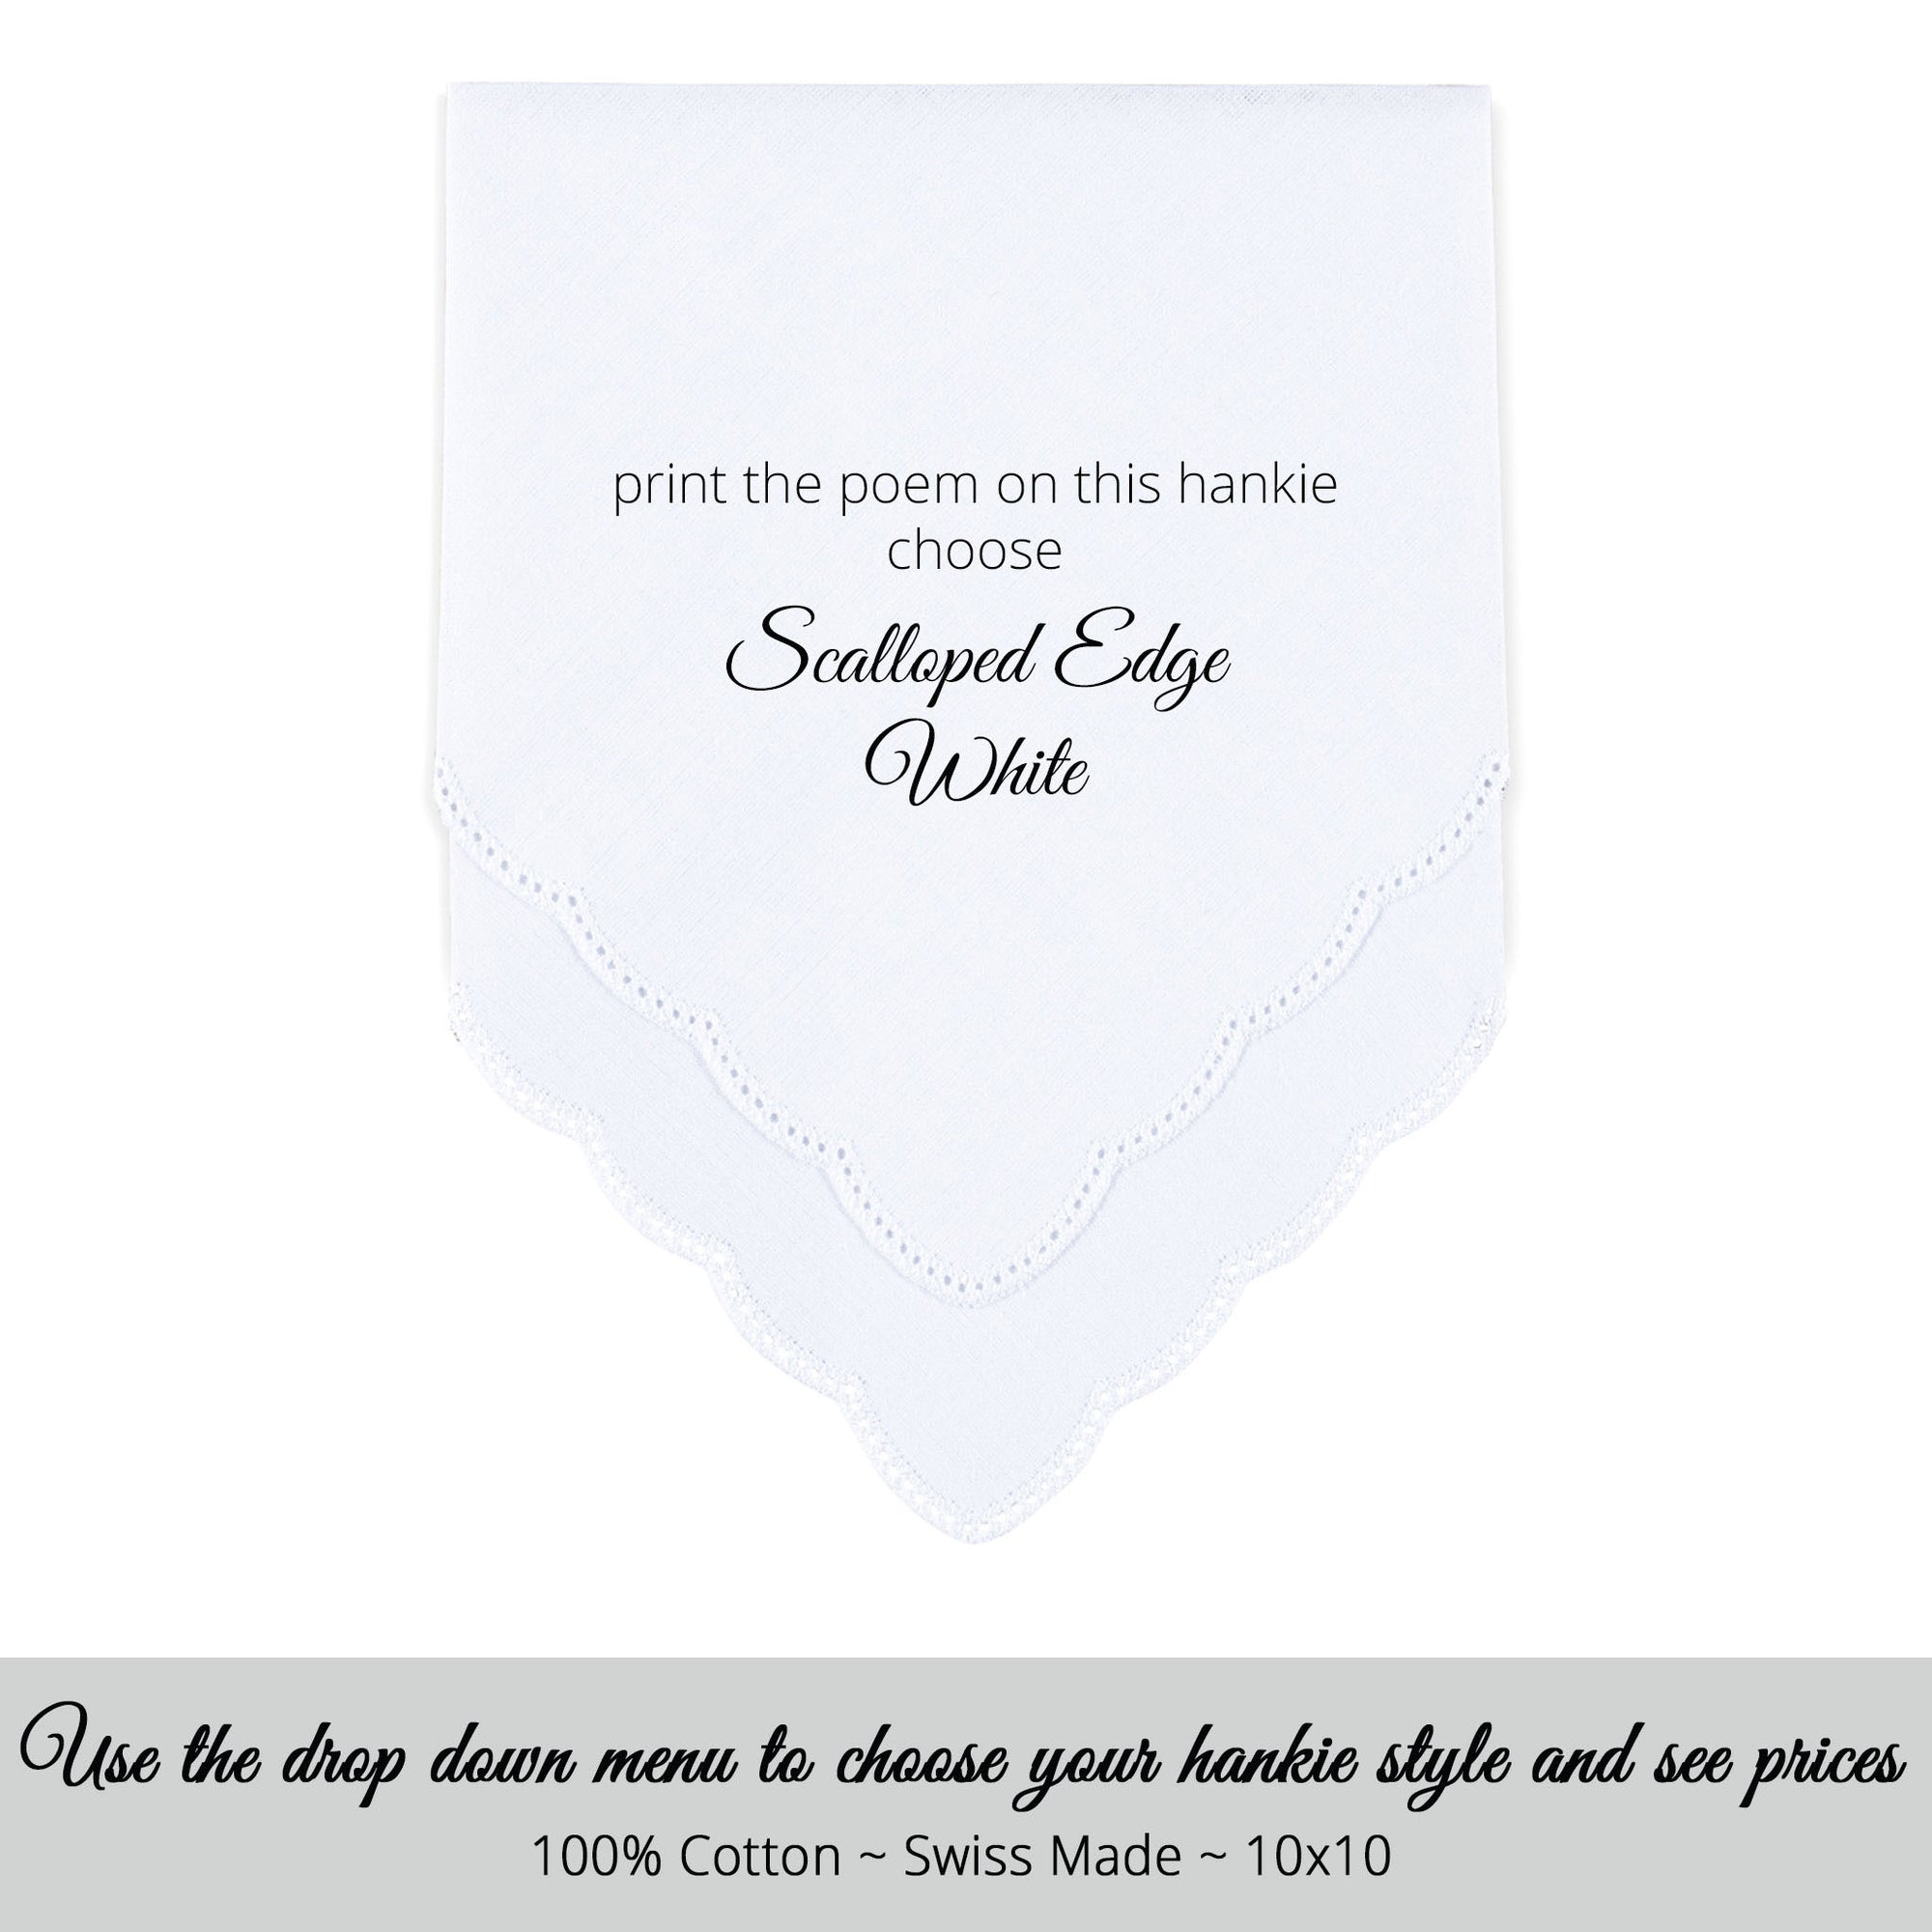 Scalloped edge white personalized wedding handkerchief for the Bride